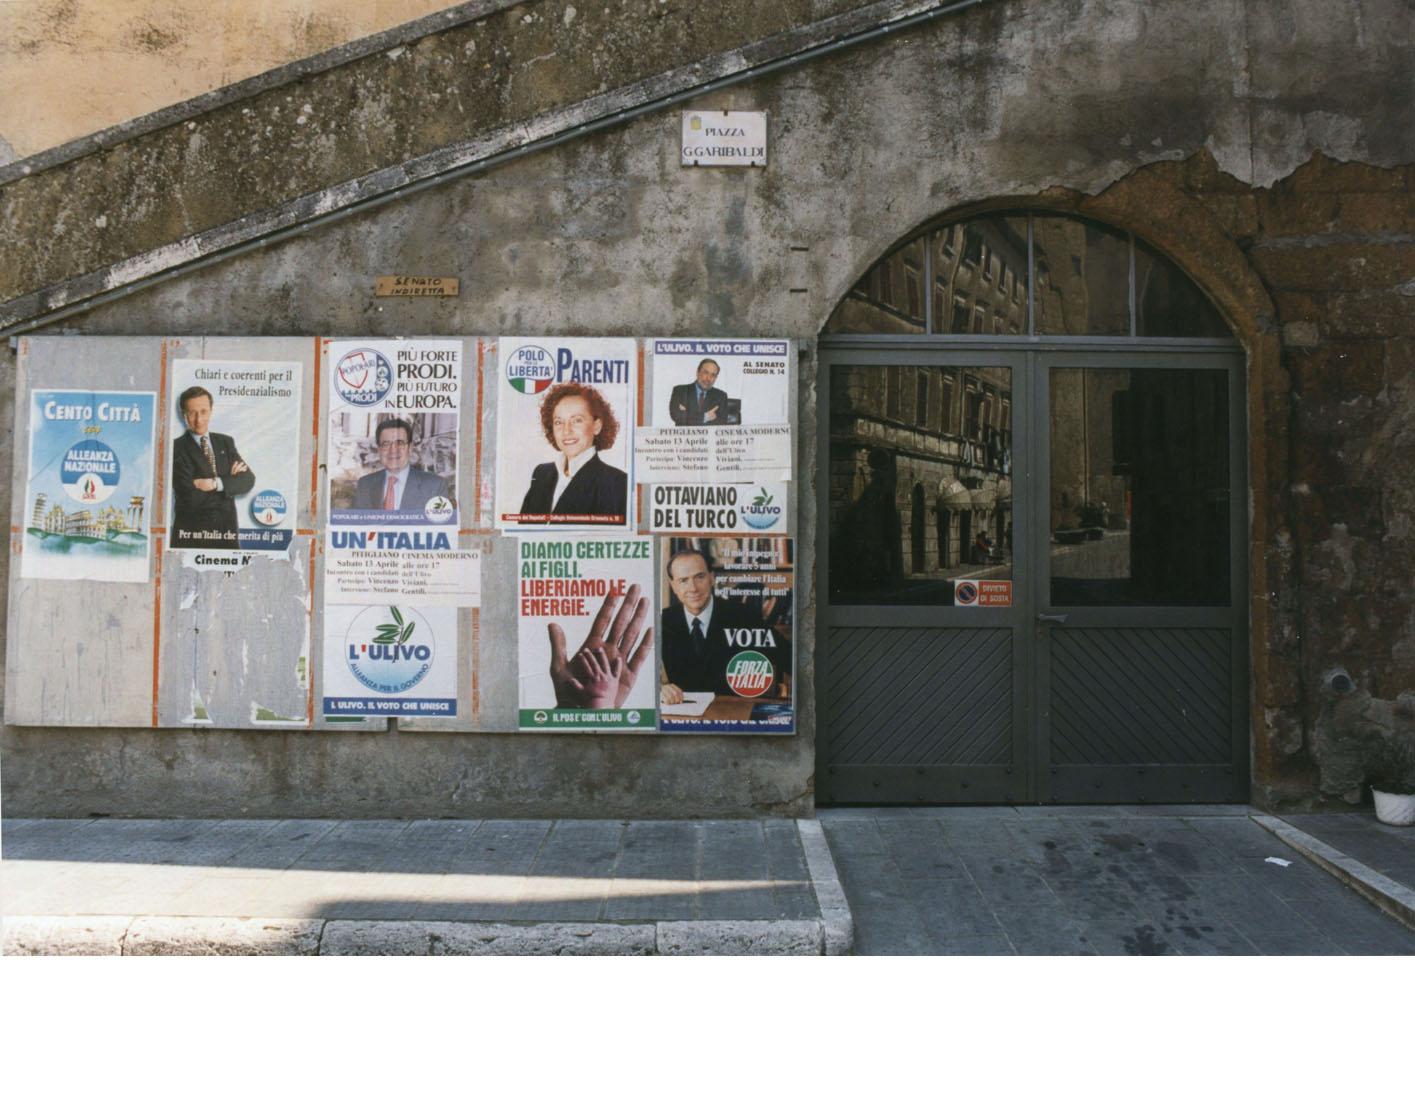 31- Pitigliano, 15 avril 1996 avant les élections